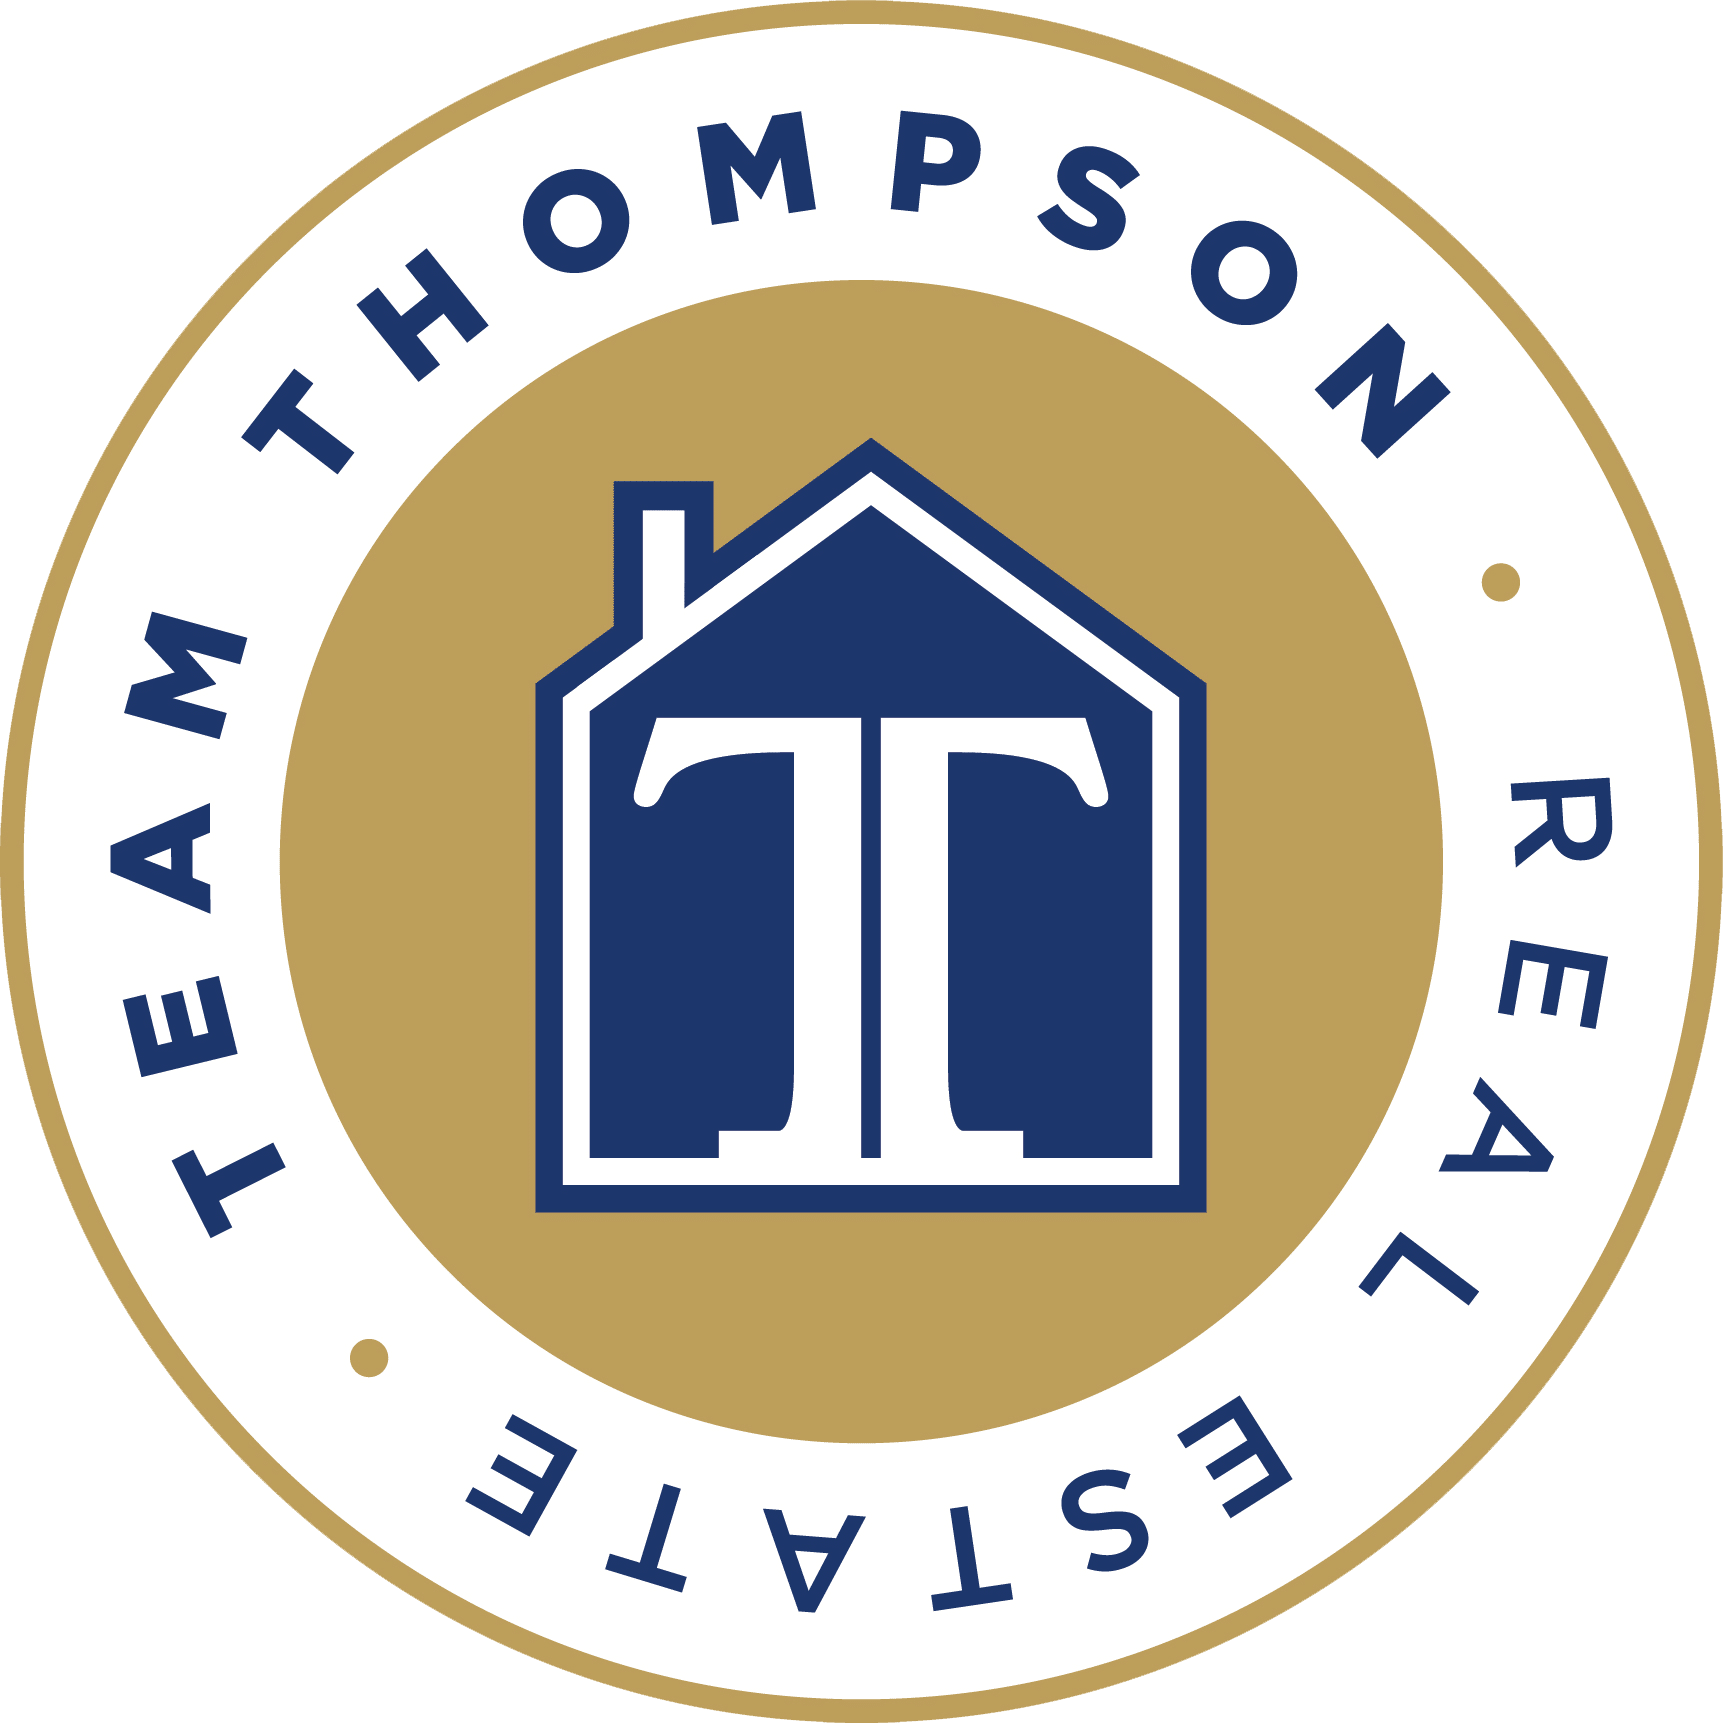 Team Thompson circle logo